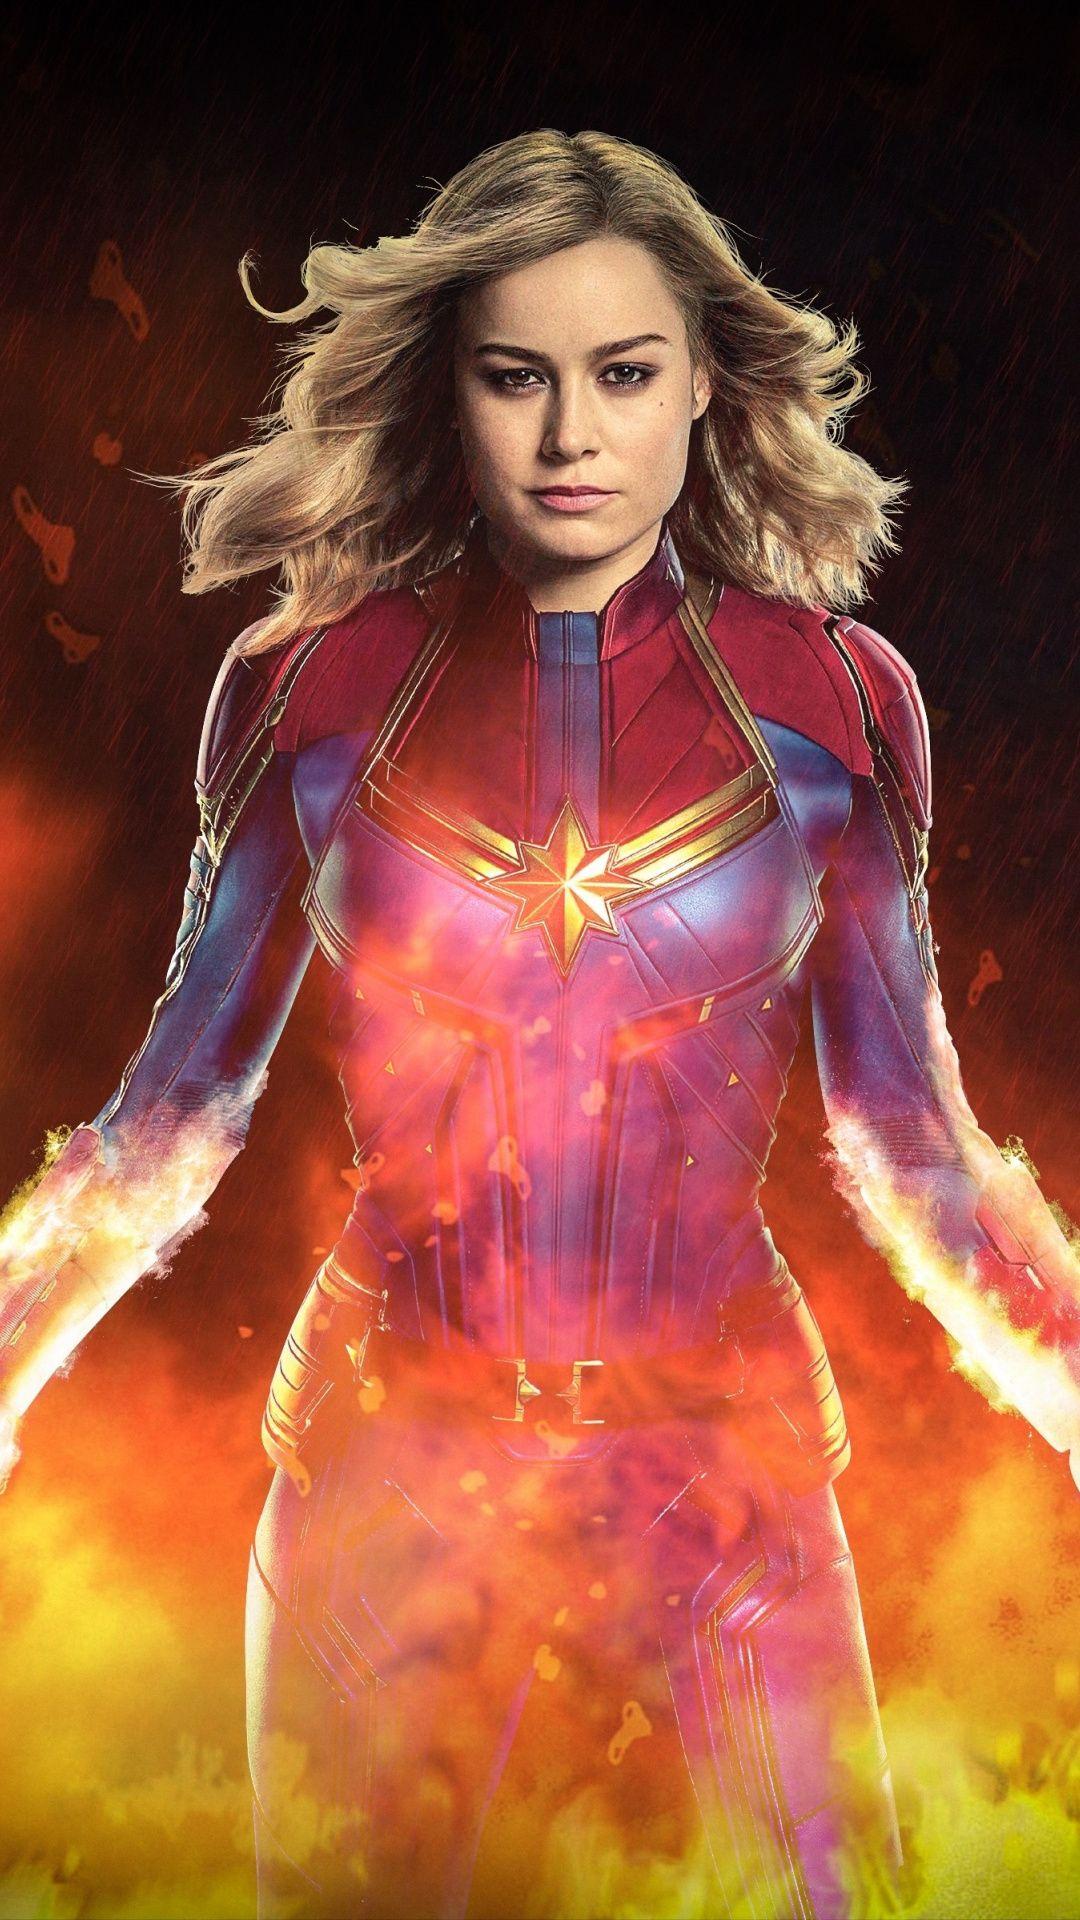 Fan art, Brie Larson, superhero, Captain Marvel, 2019 movie